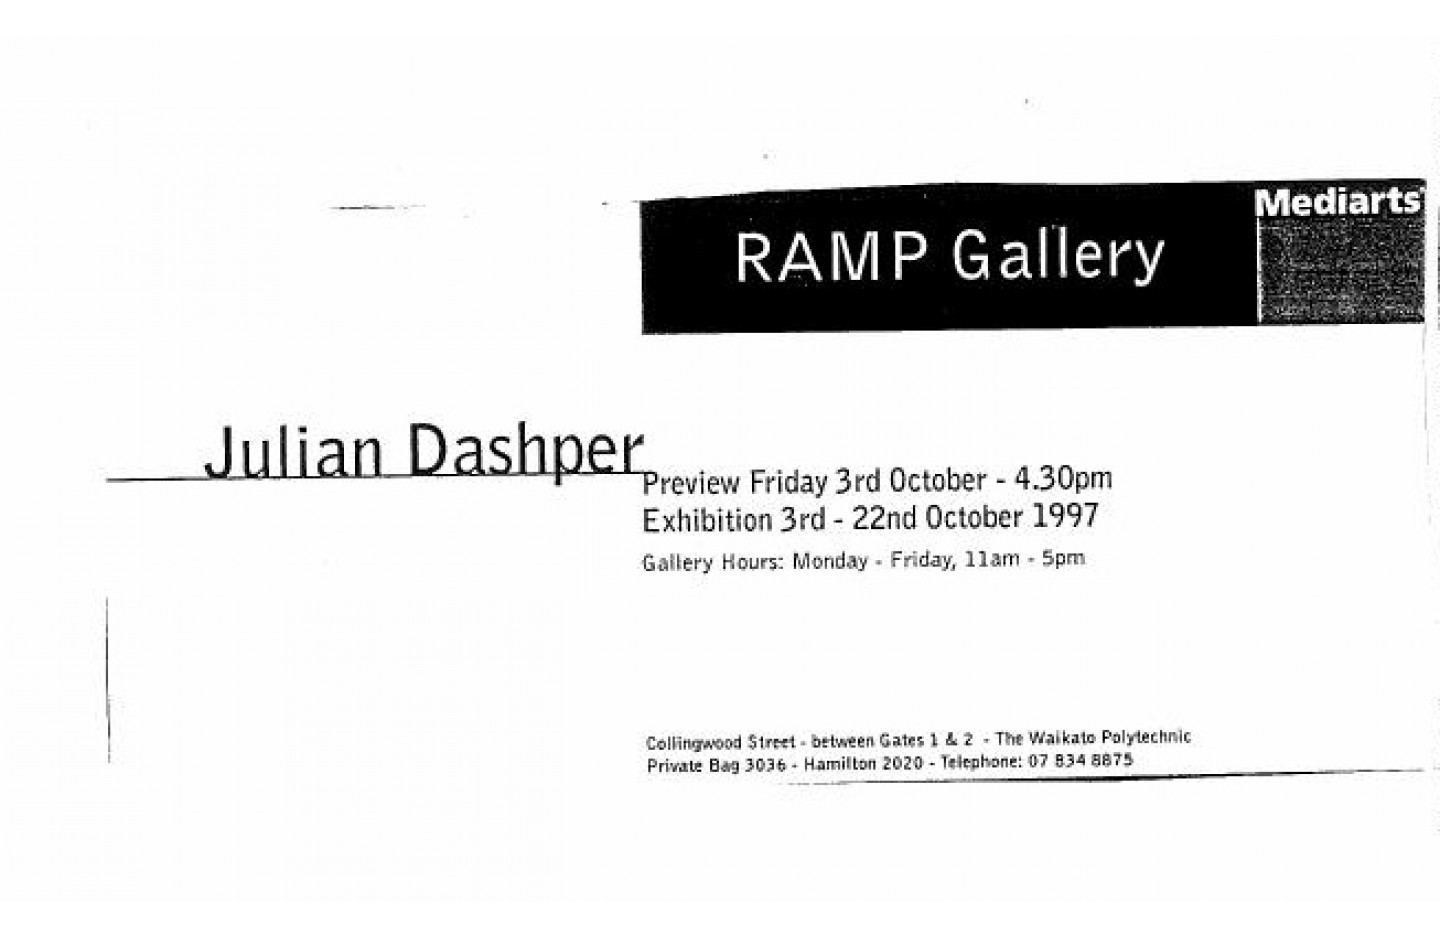 Julian Dashper, Ramp Gallery (1997)